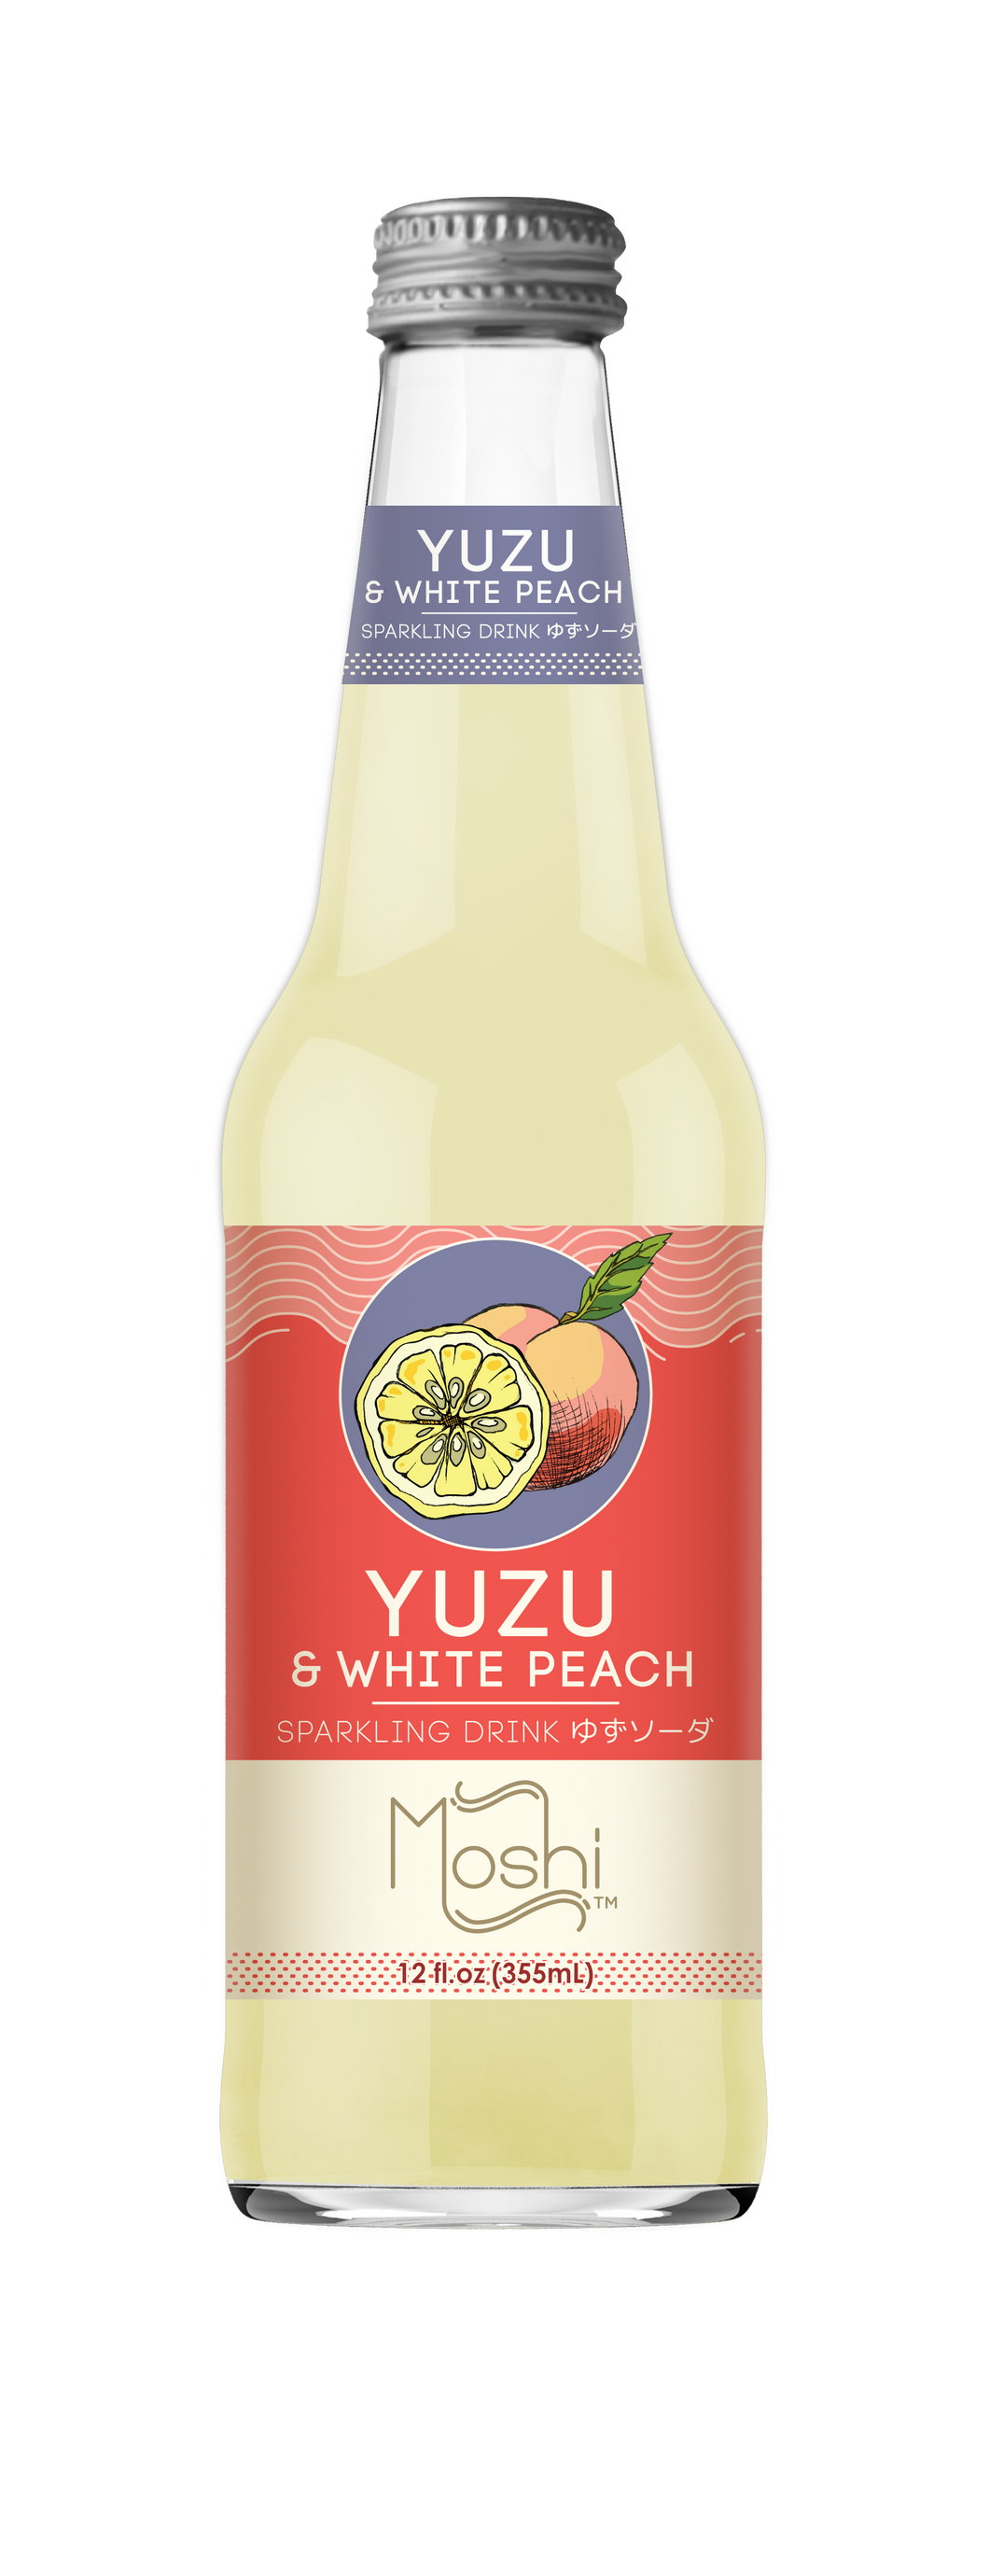 Moshi Yuzu Sparkling Drink - White Peach